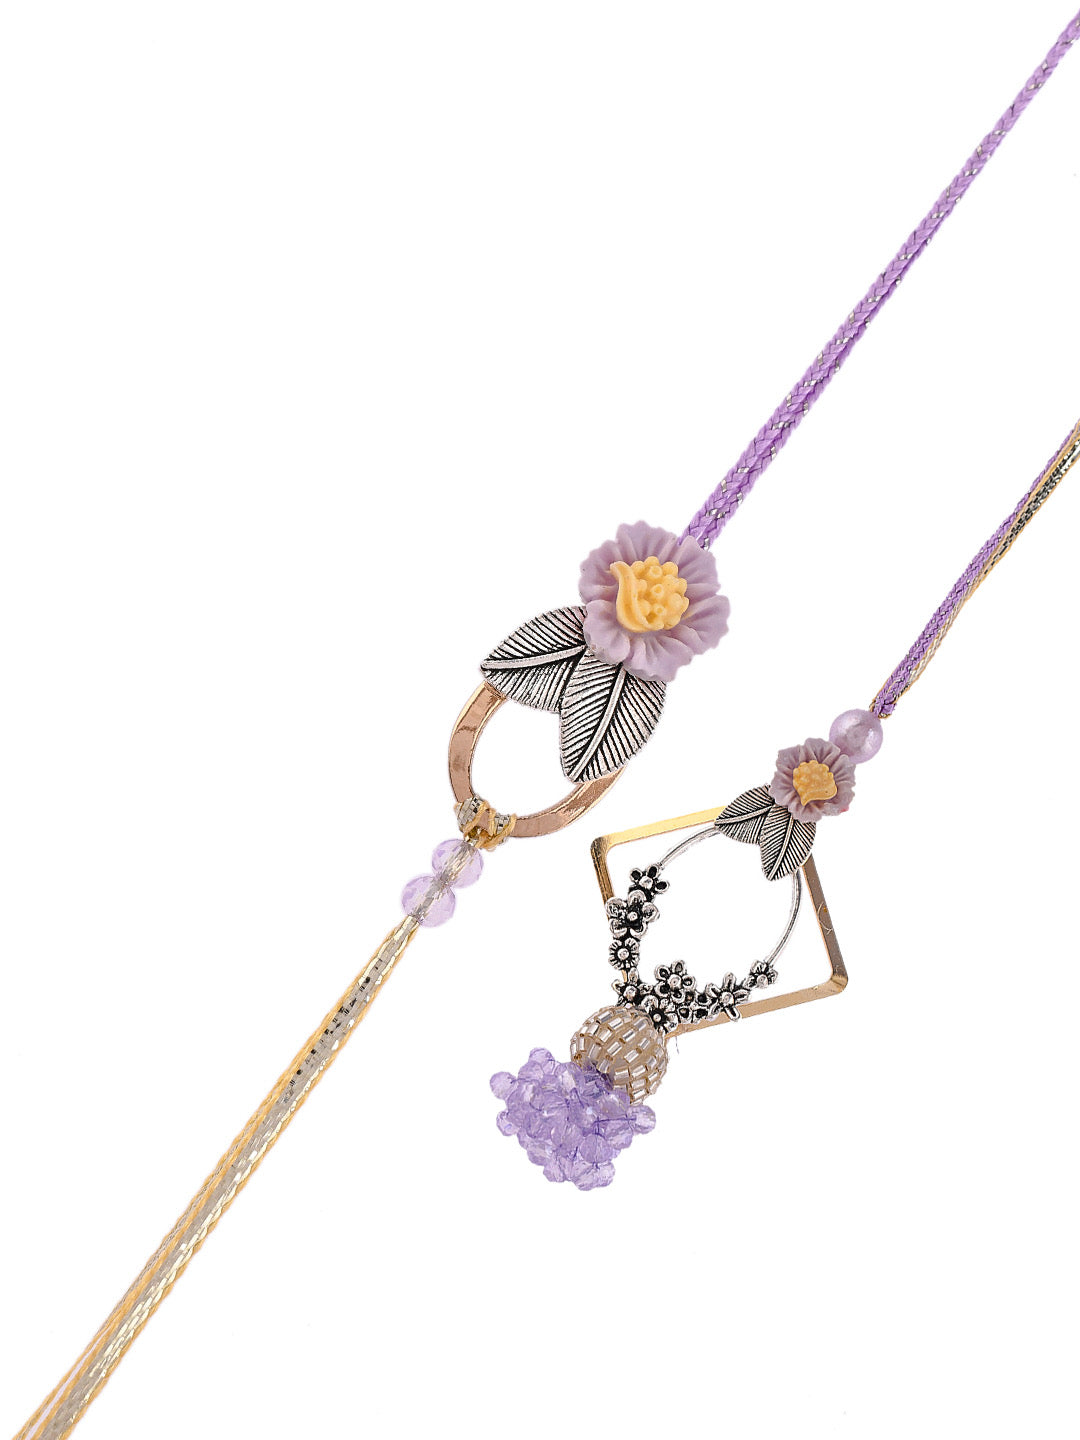 Purple Beads and Silver Woven Luxe Bhaiya Bhabhi Rakhi Set - Only Pair (RP2337)